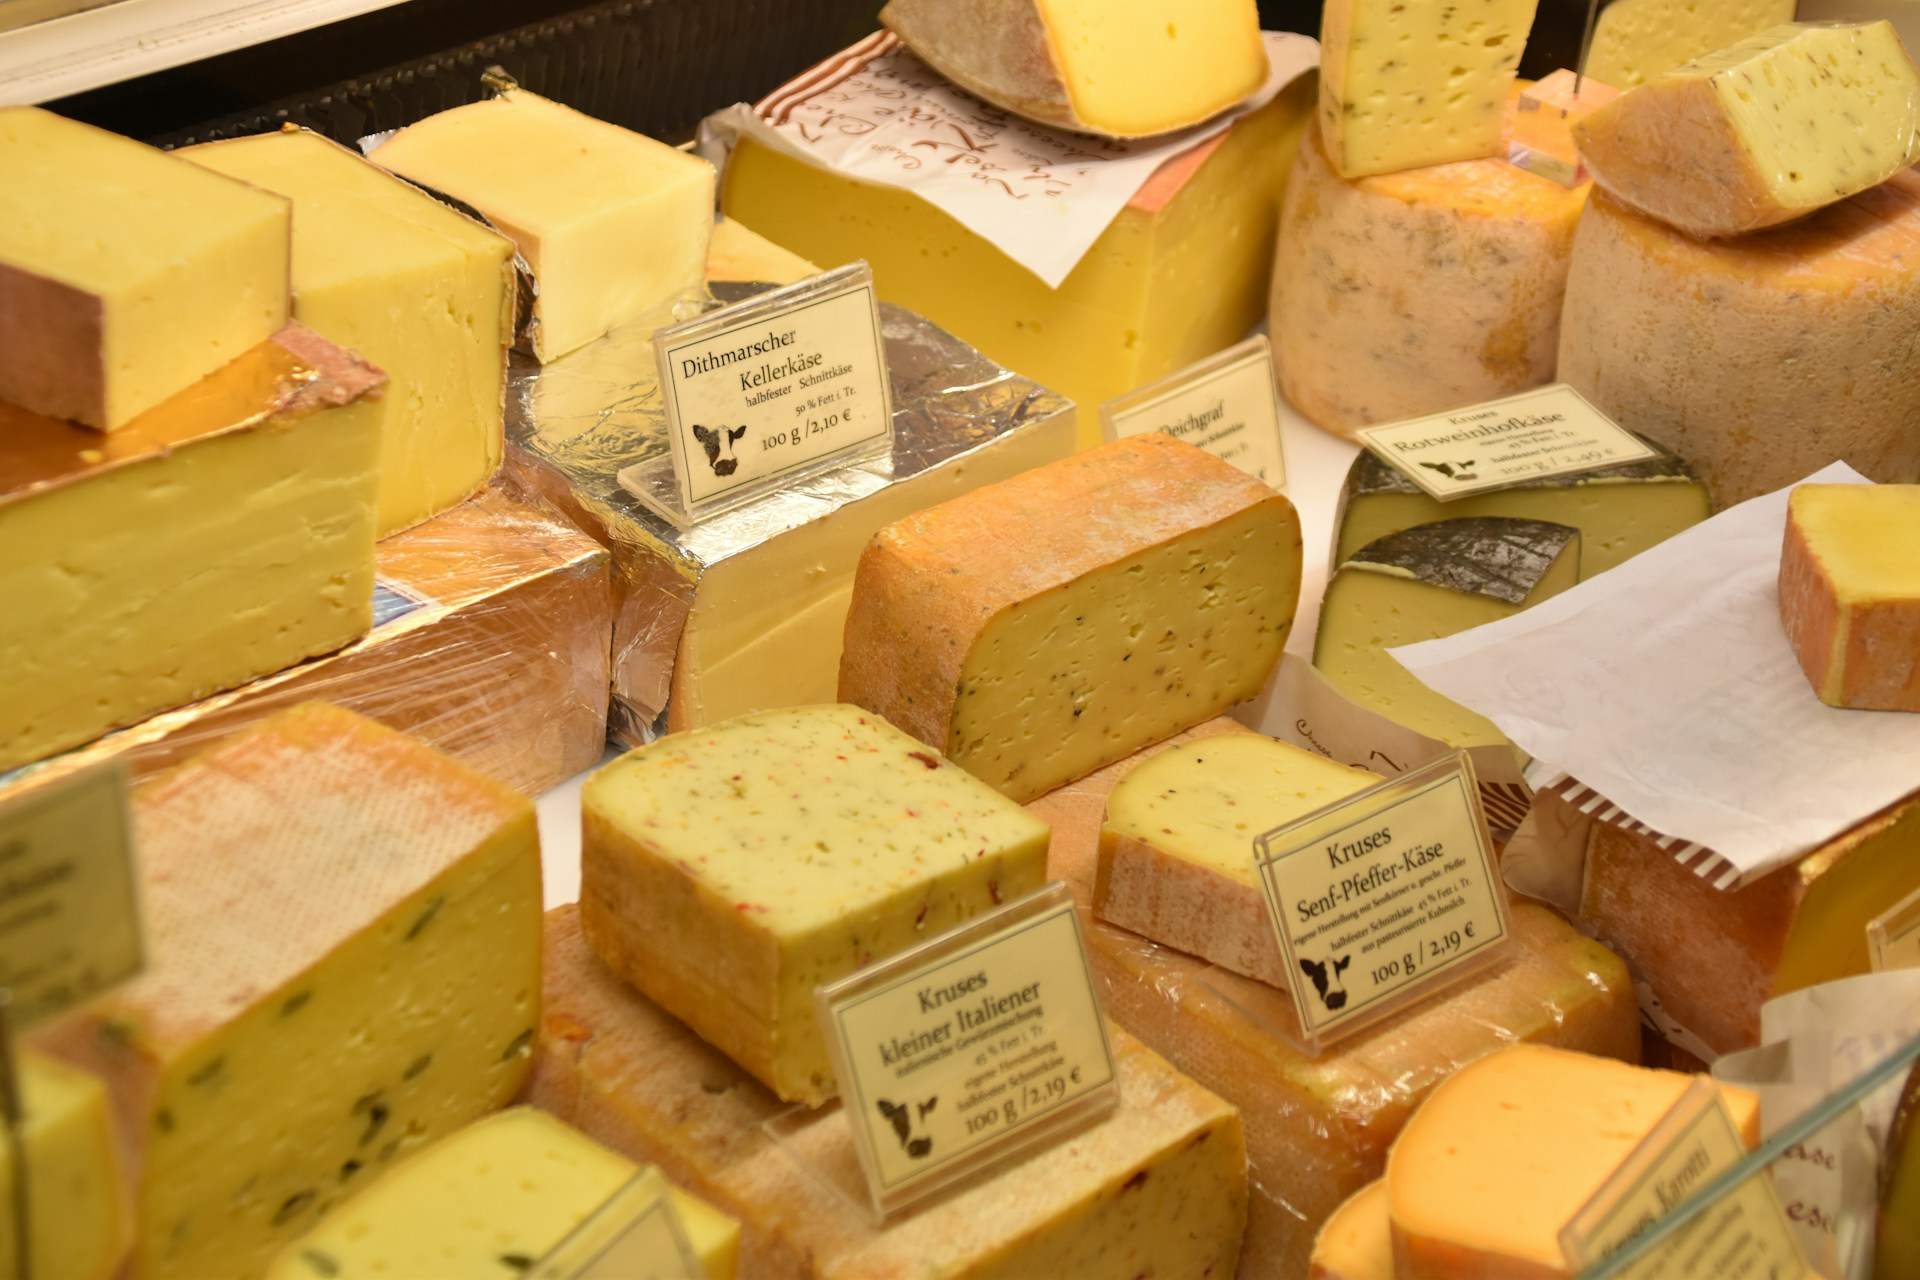 Menjar formatge augmenta el colesterol?